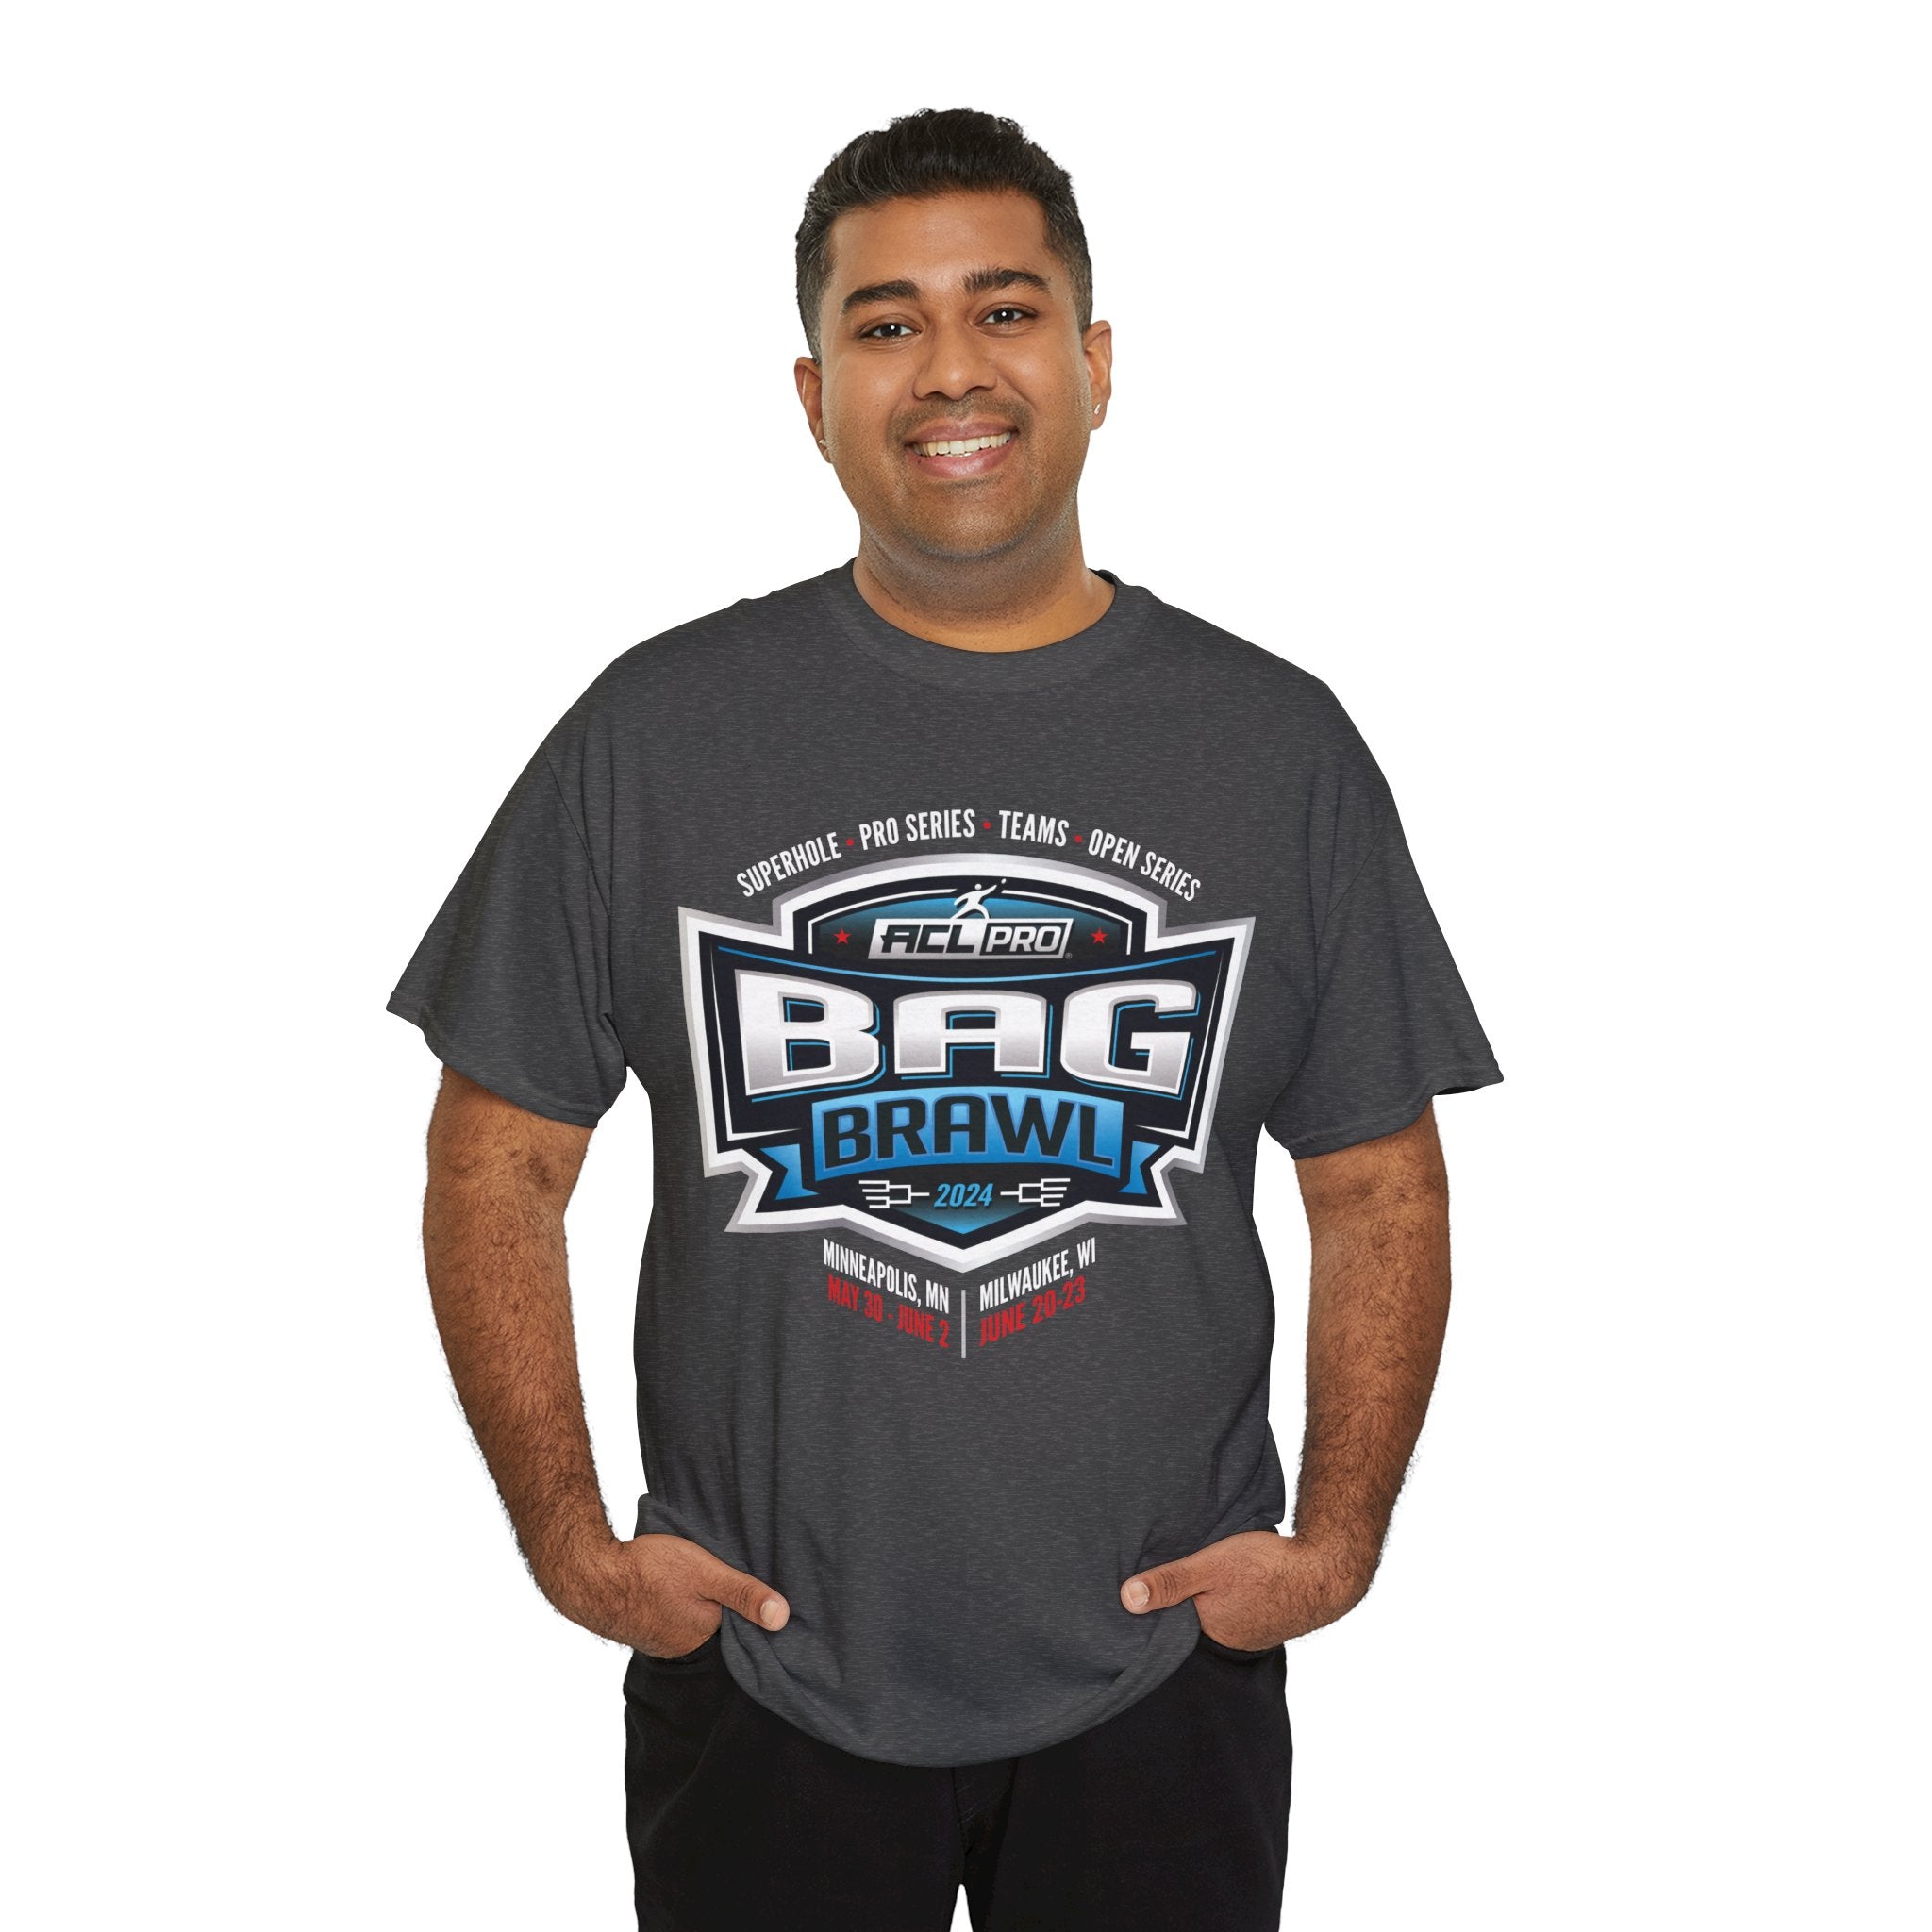 ACL Bag Brawl 2024 T-Shirt